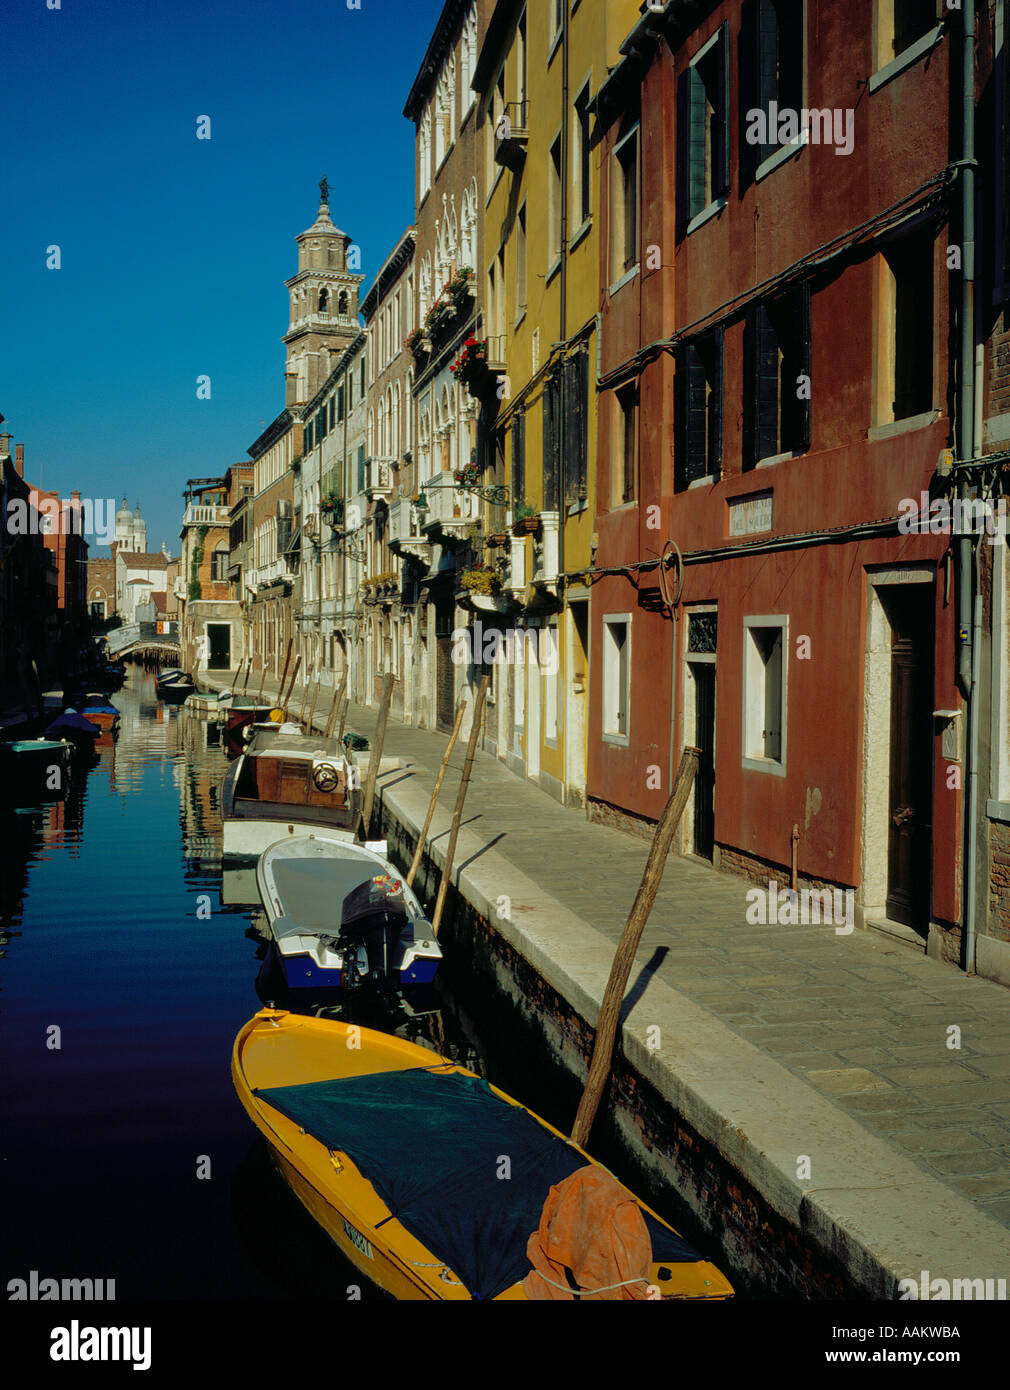 Fondamenta del Squero Venice Italy Europe. Photo by Willy Matheisl Stock Photo